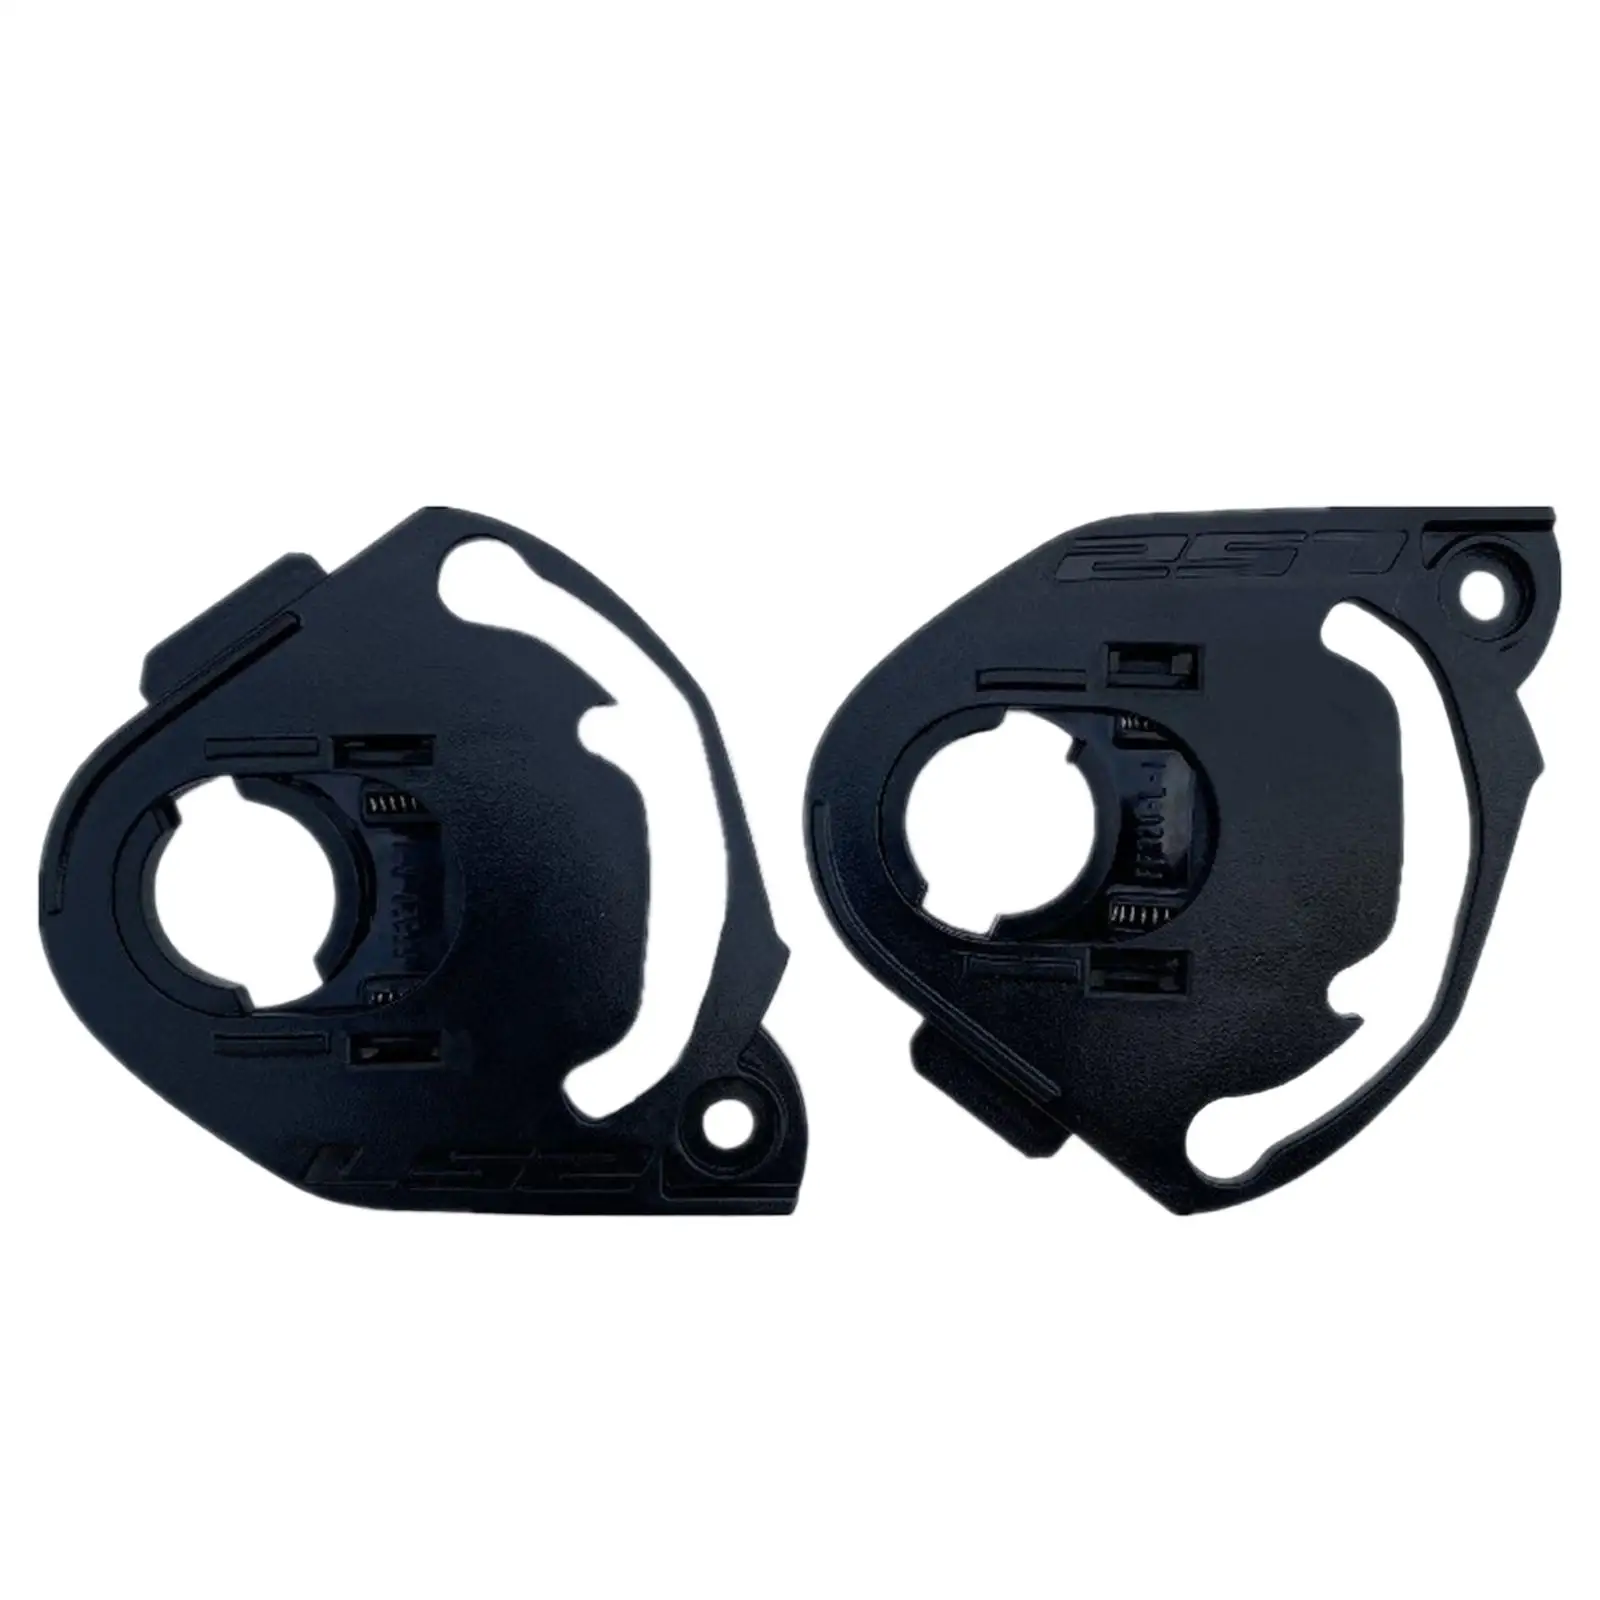 2Pcs Motorcycle Helmet Lens Base Replace Helmets Visor Mounts for Ff320